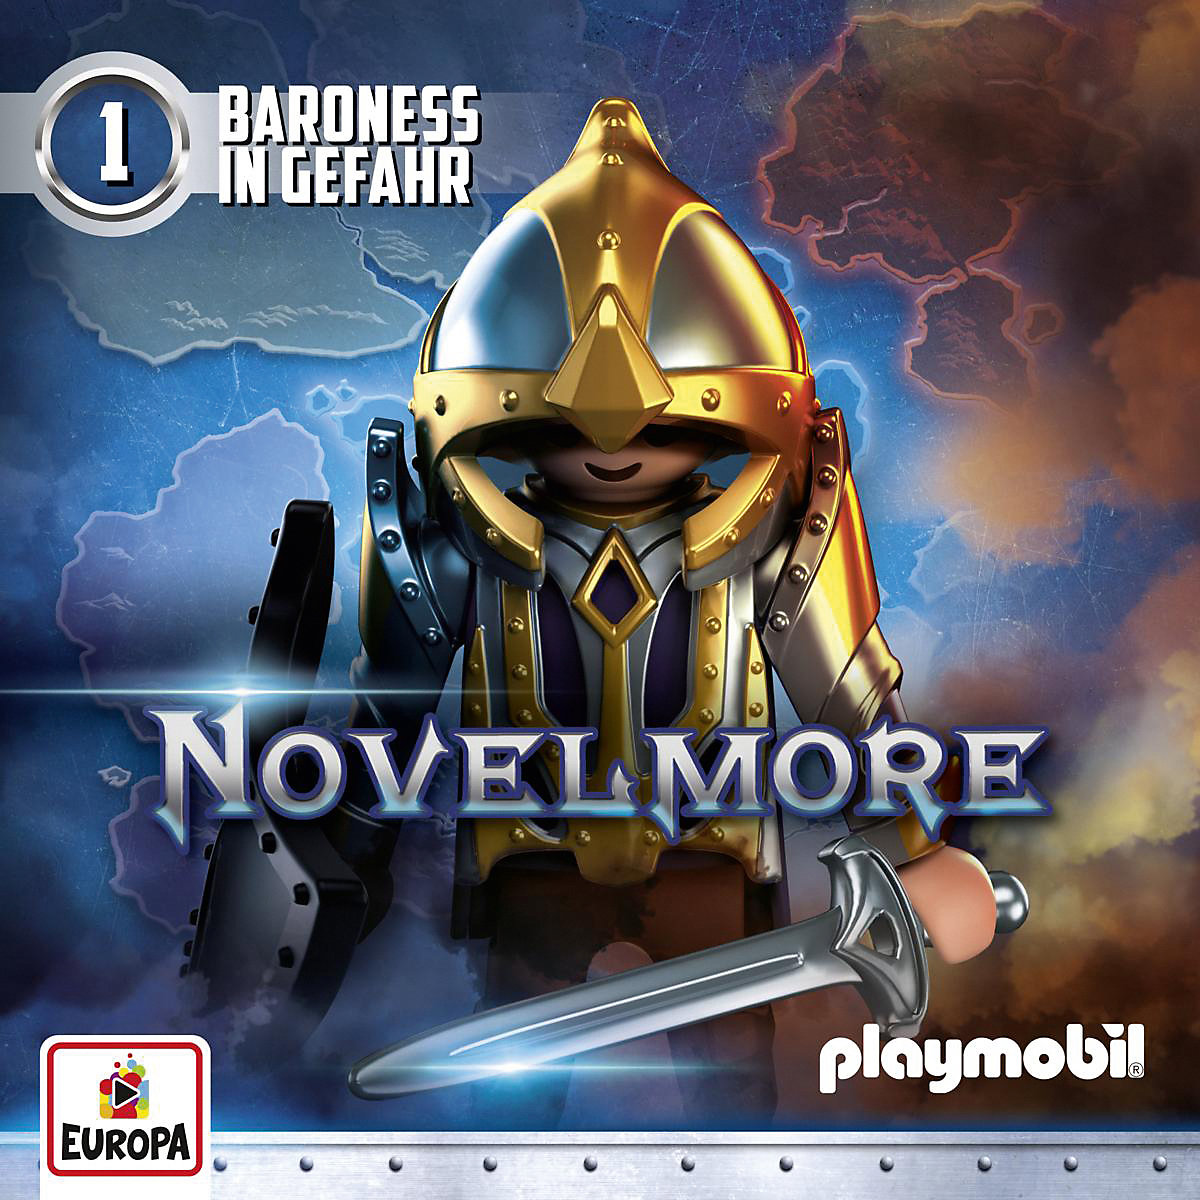 CD Playmobil 1 Baroness in Gefahr